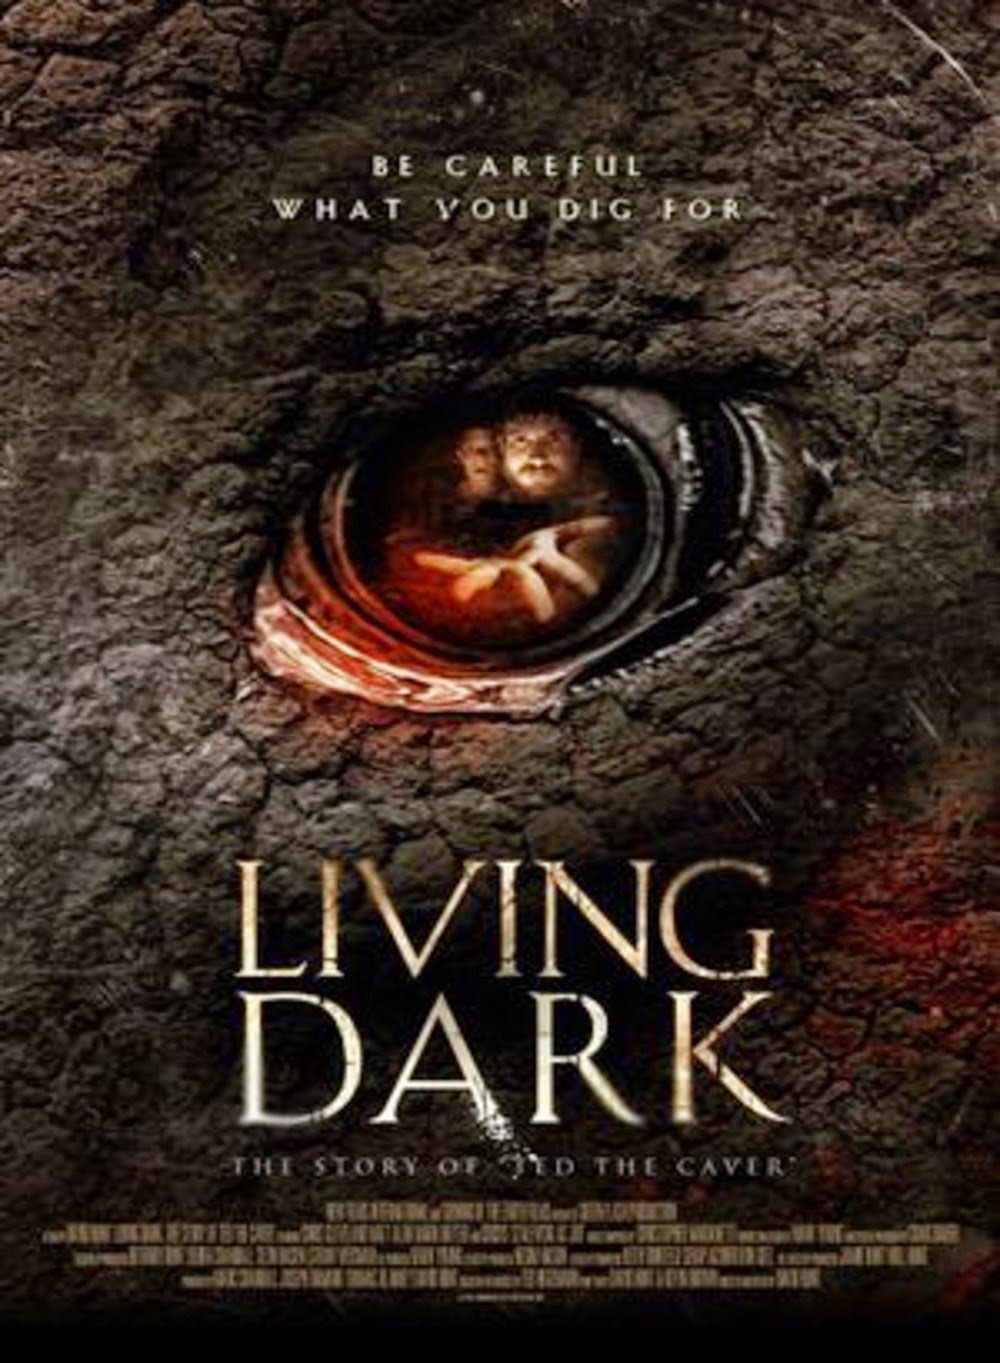 living dark movie review